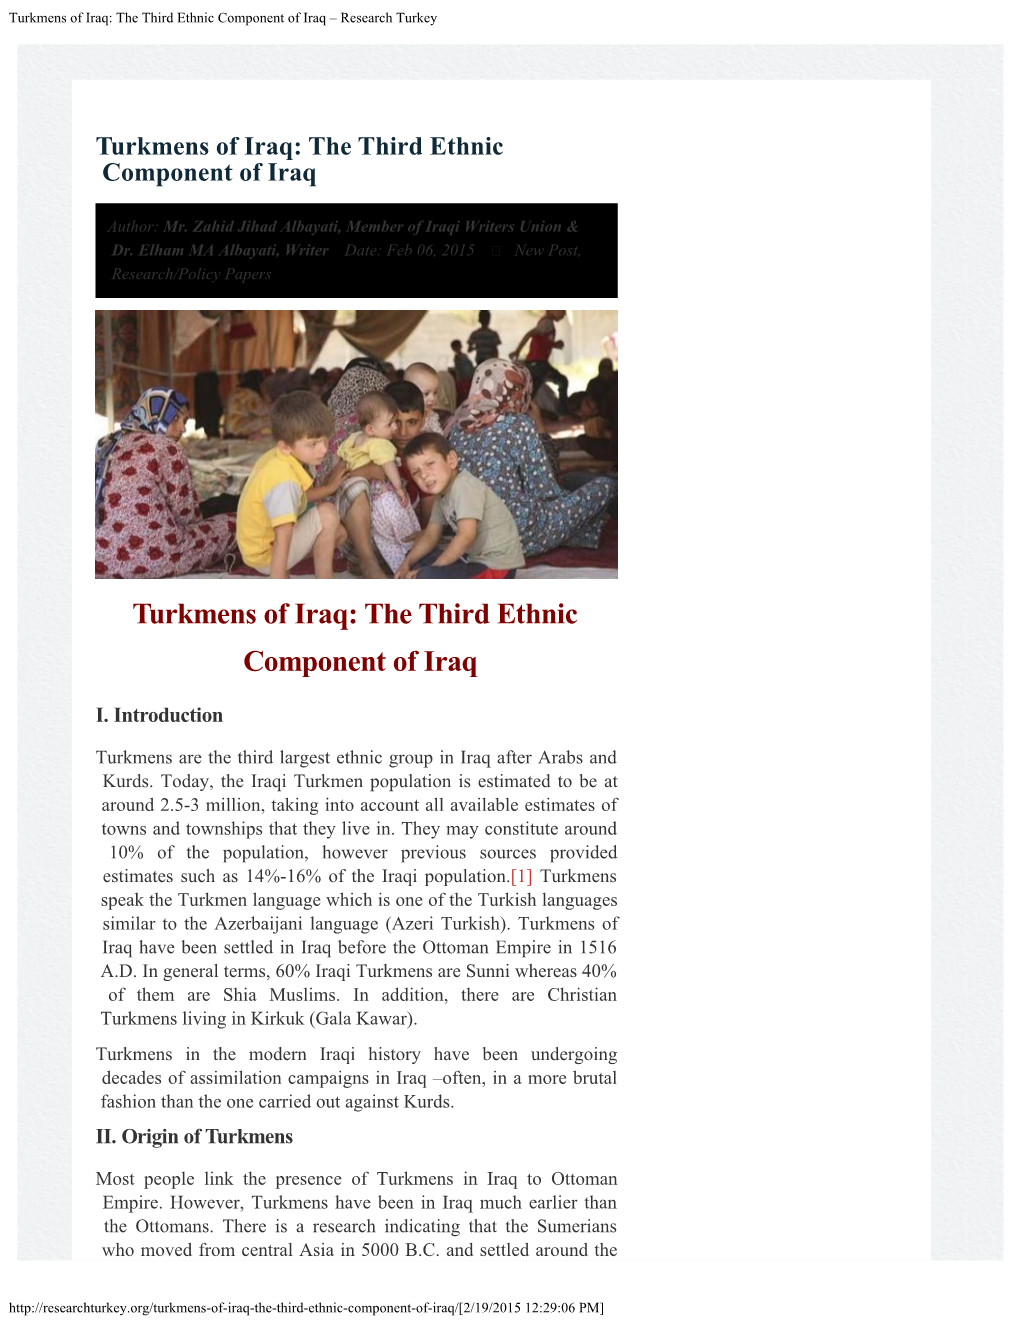 Turkmens of Iraq: the Third Ethnic Component of Iraq – Research Turkey